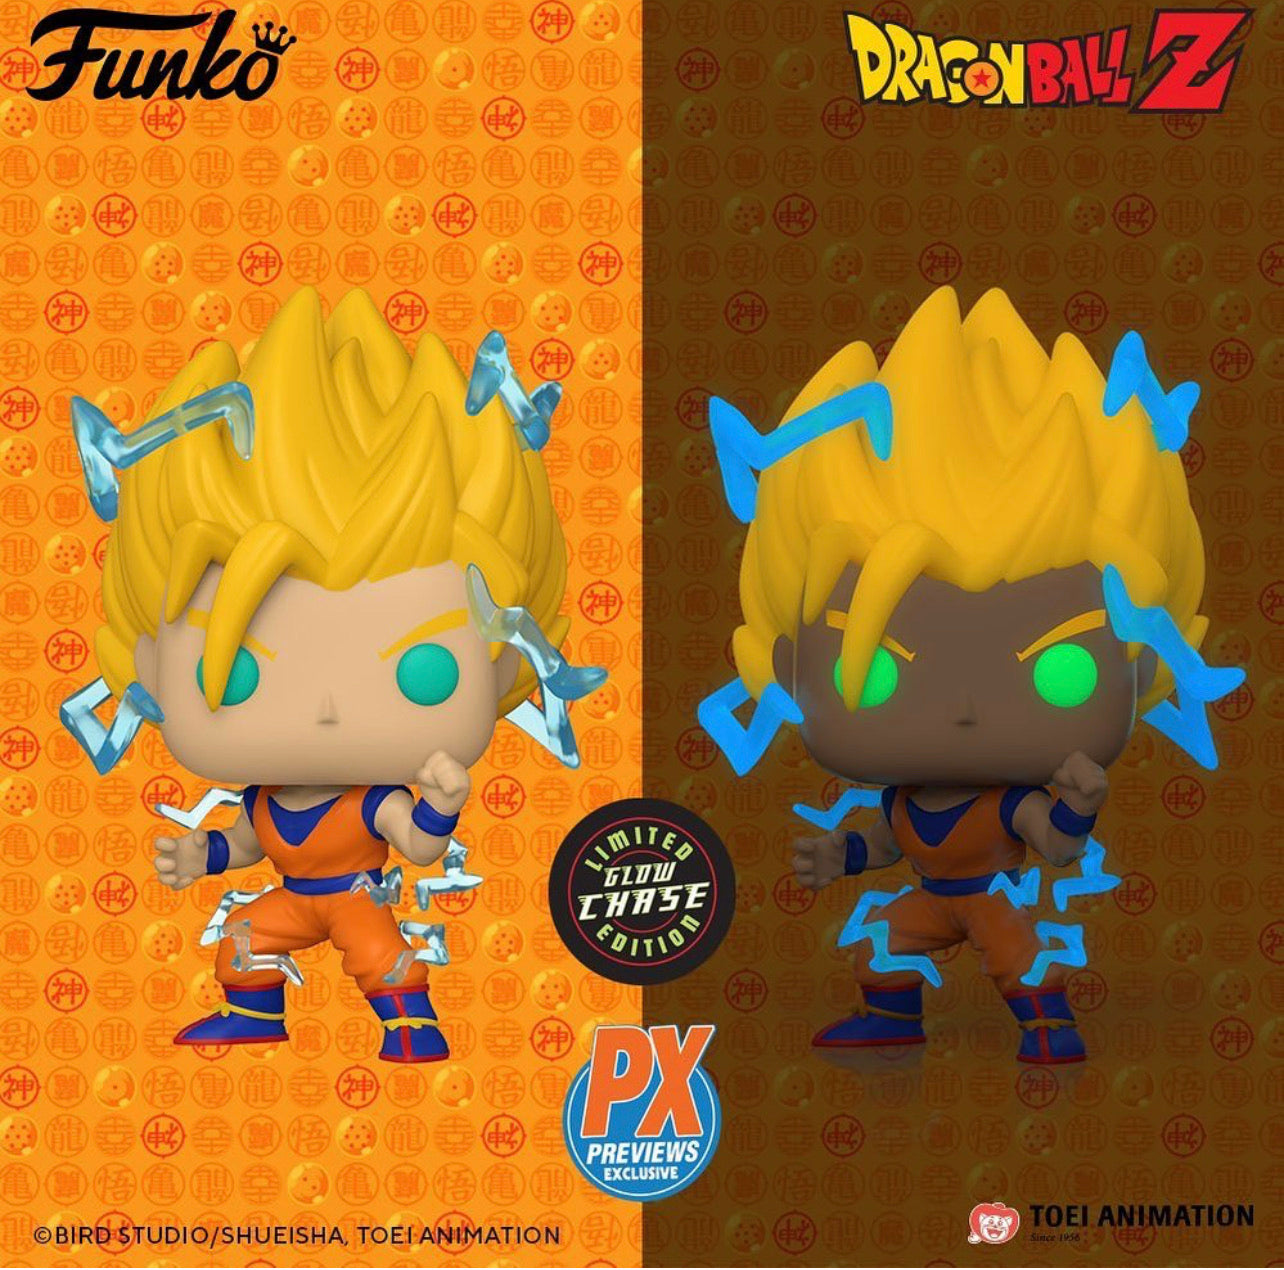 Dragon Ball Z Super Saiyan 2 Goku Pop! Vinyl Figure - Previews Exclusive(IN STOCK)